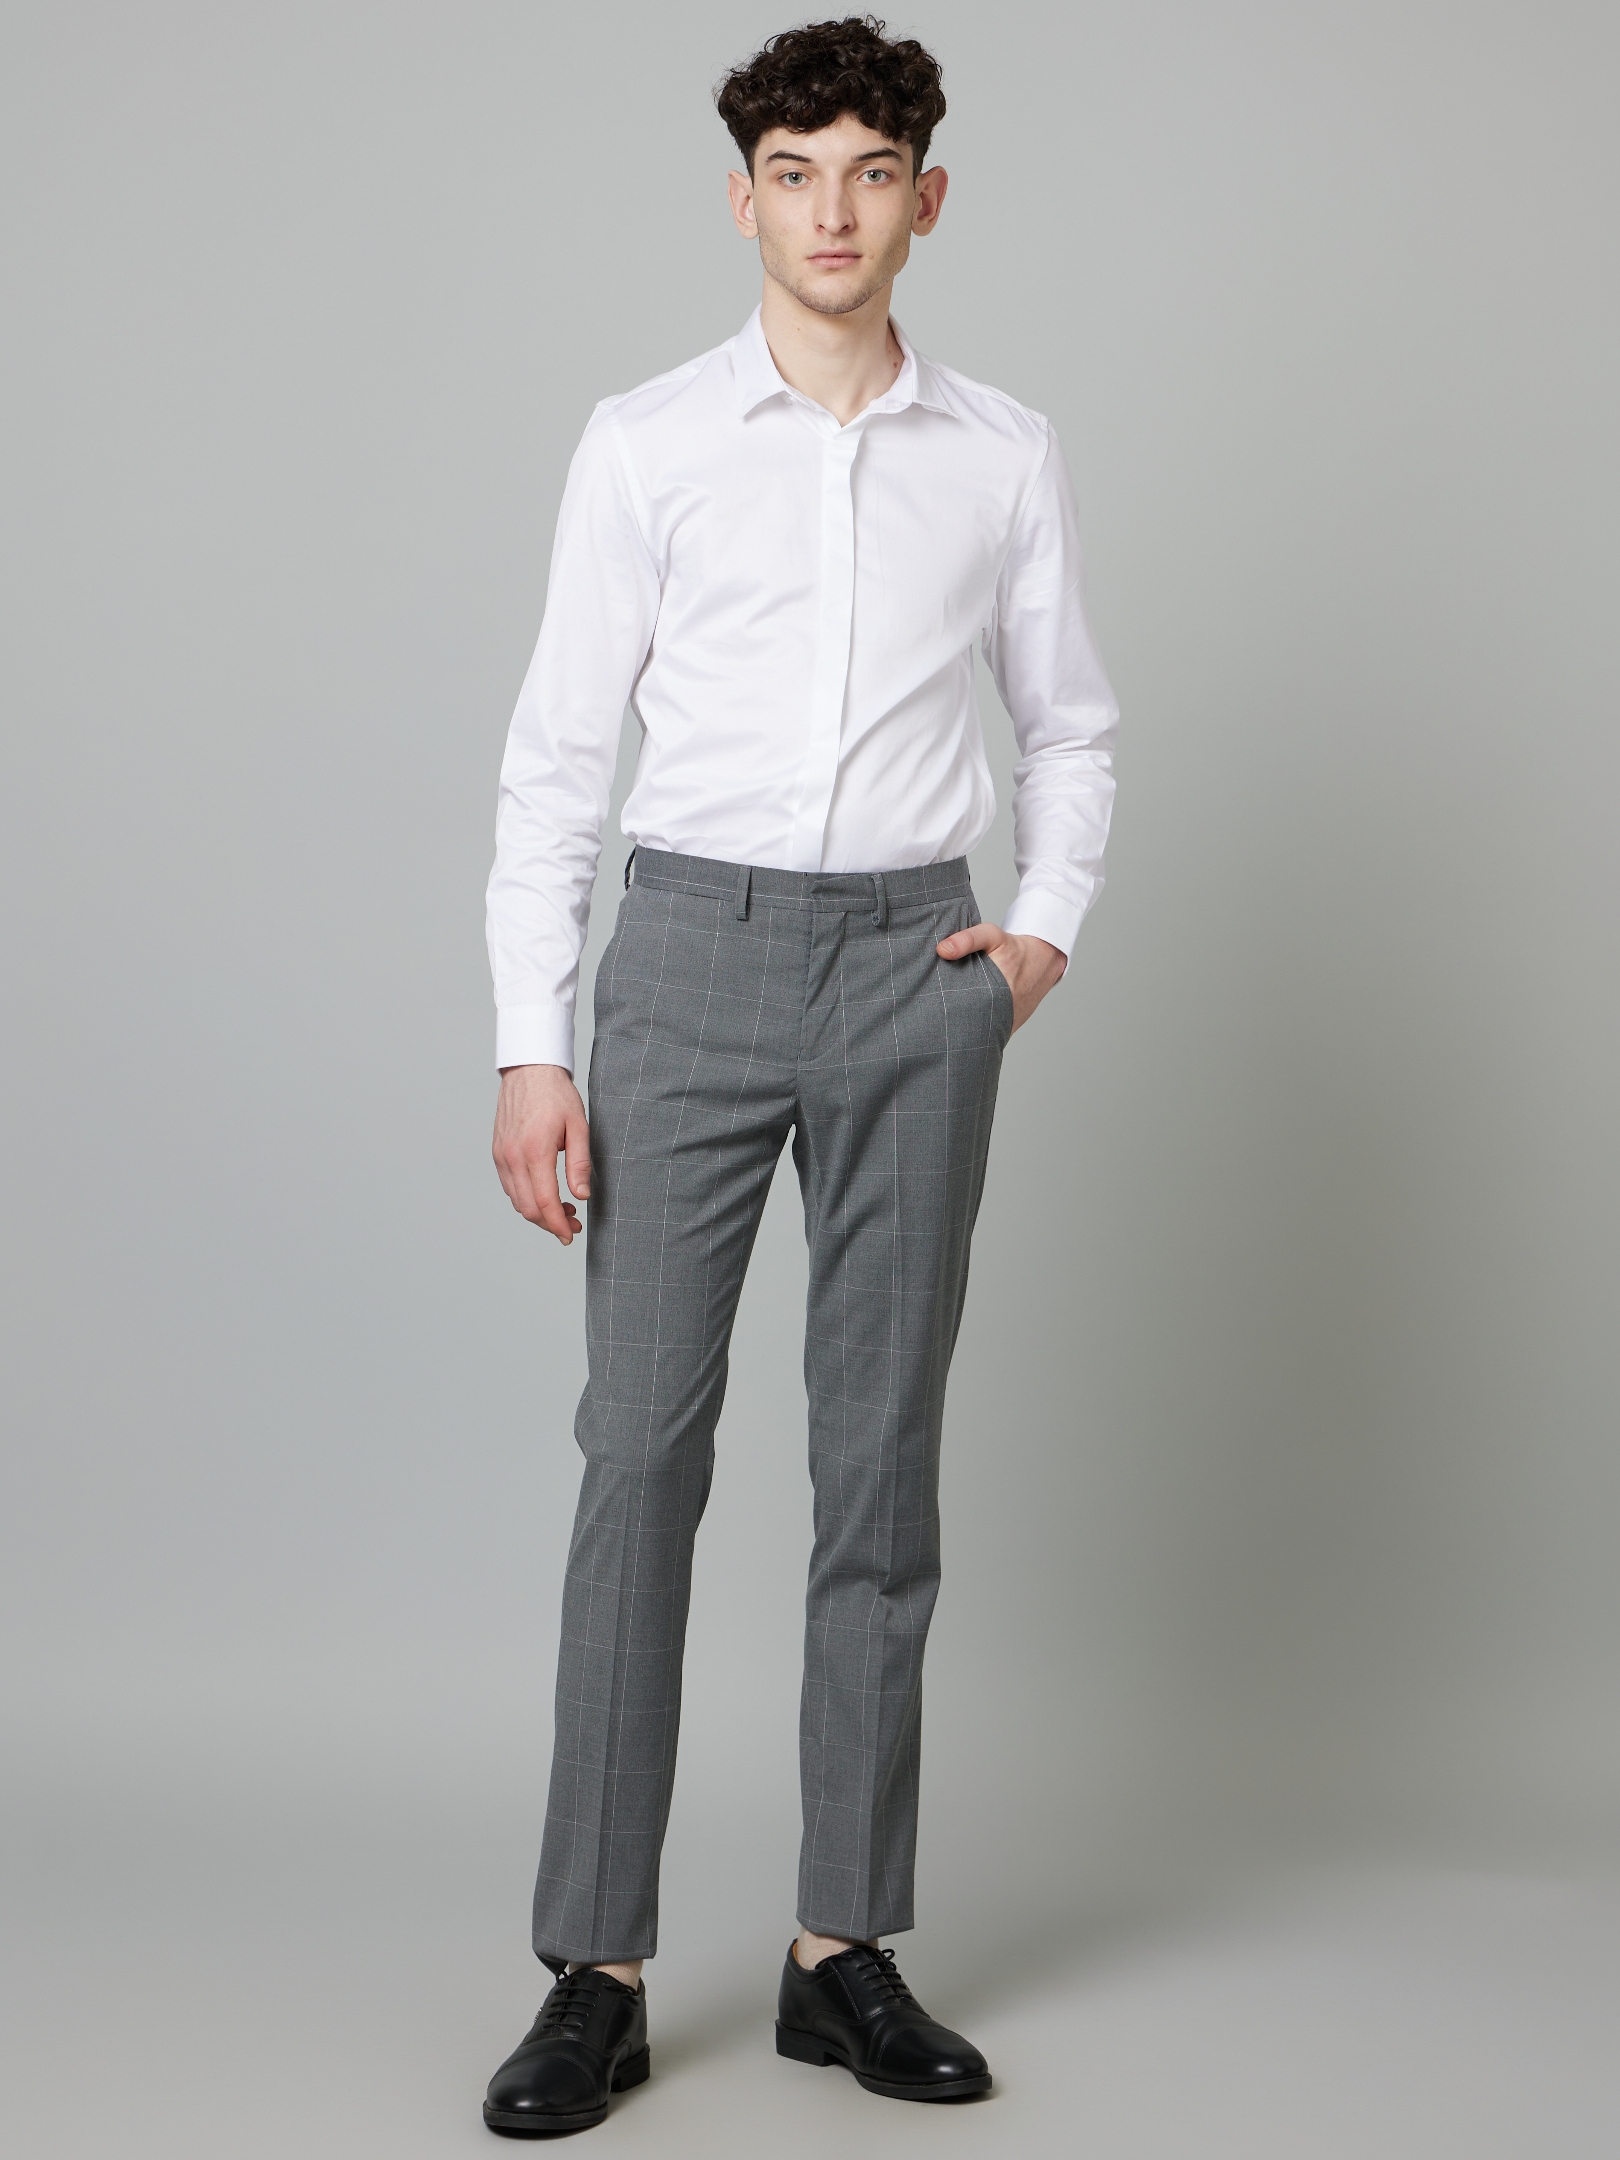 Buy JAINISH Men Slim Fit Checked Formal Trousers (Black, 32) at Amazon.in